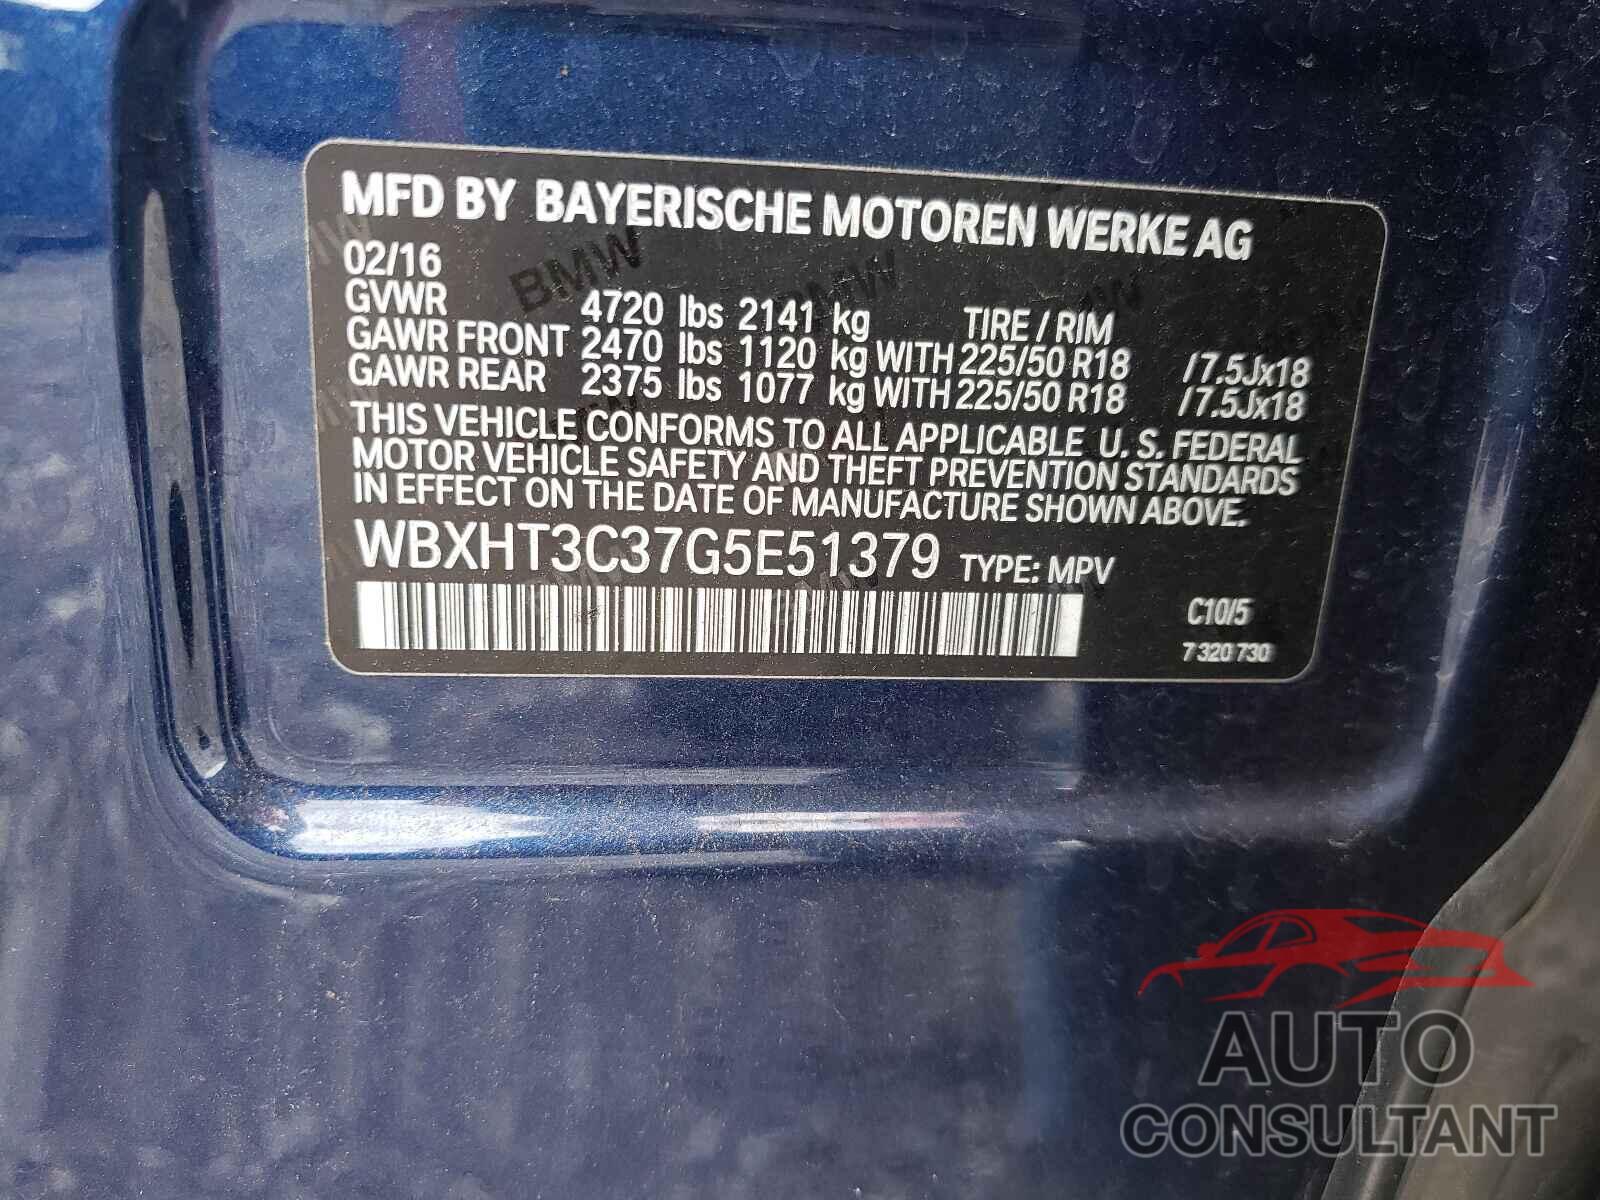 BMW X1 2016 - WBXHT3C37G5E51379